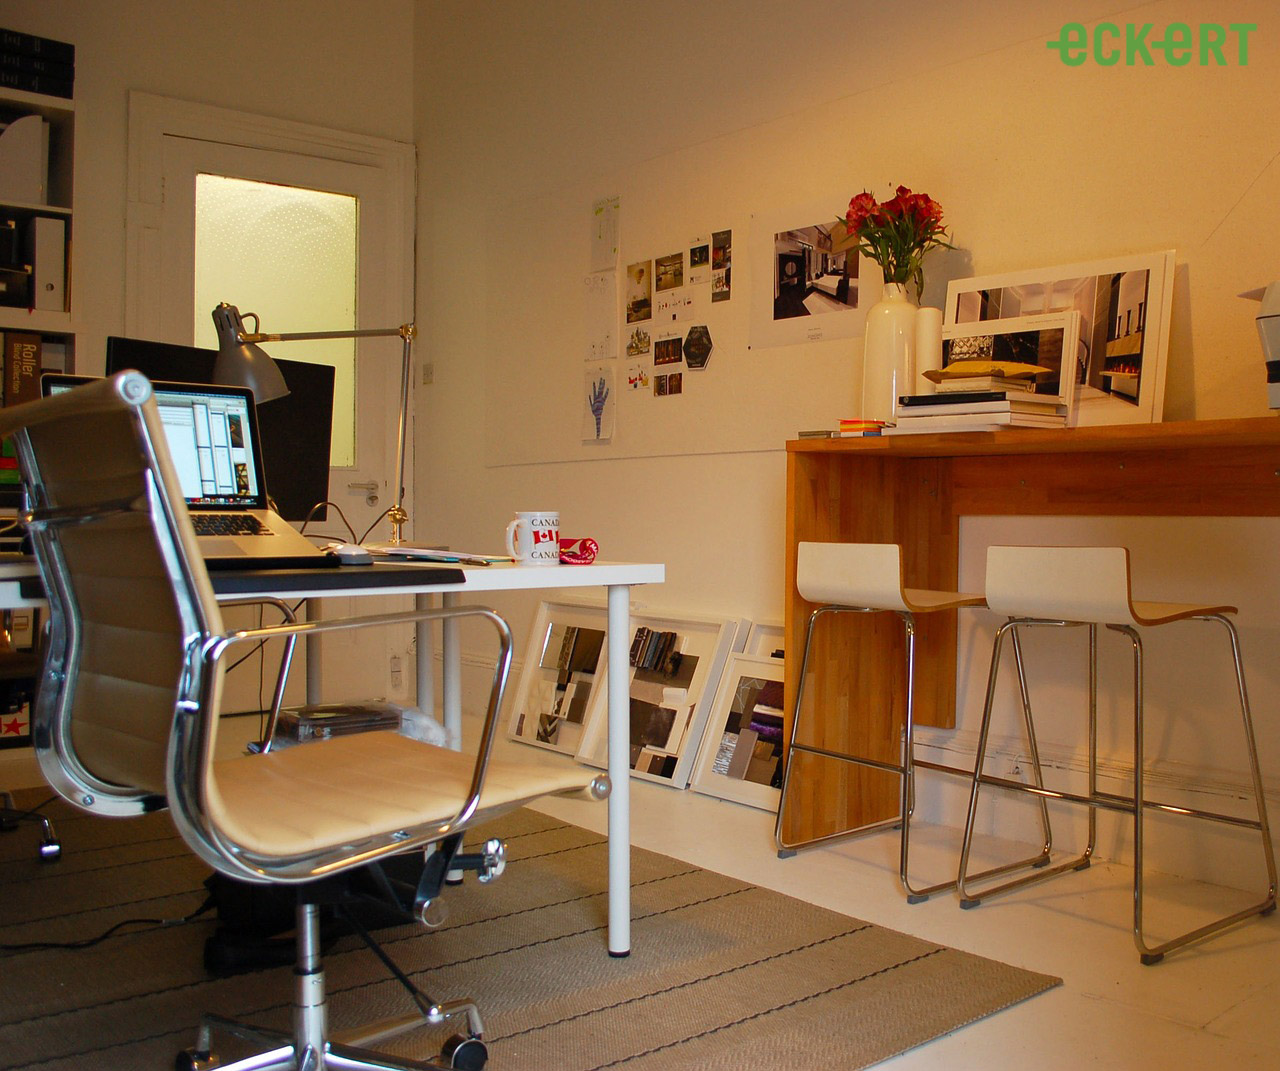 Eckert-Seminare @ Home (-Office)